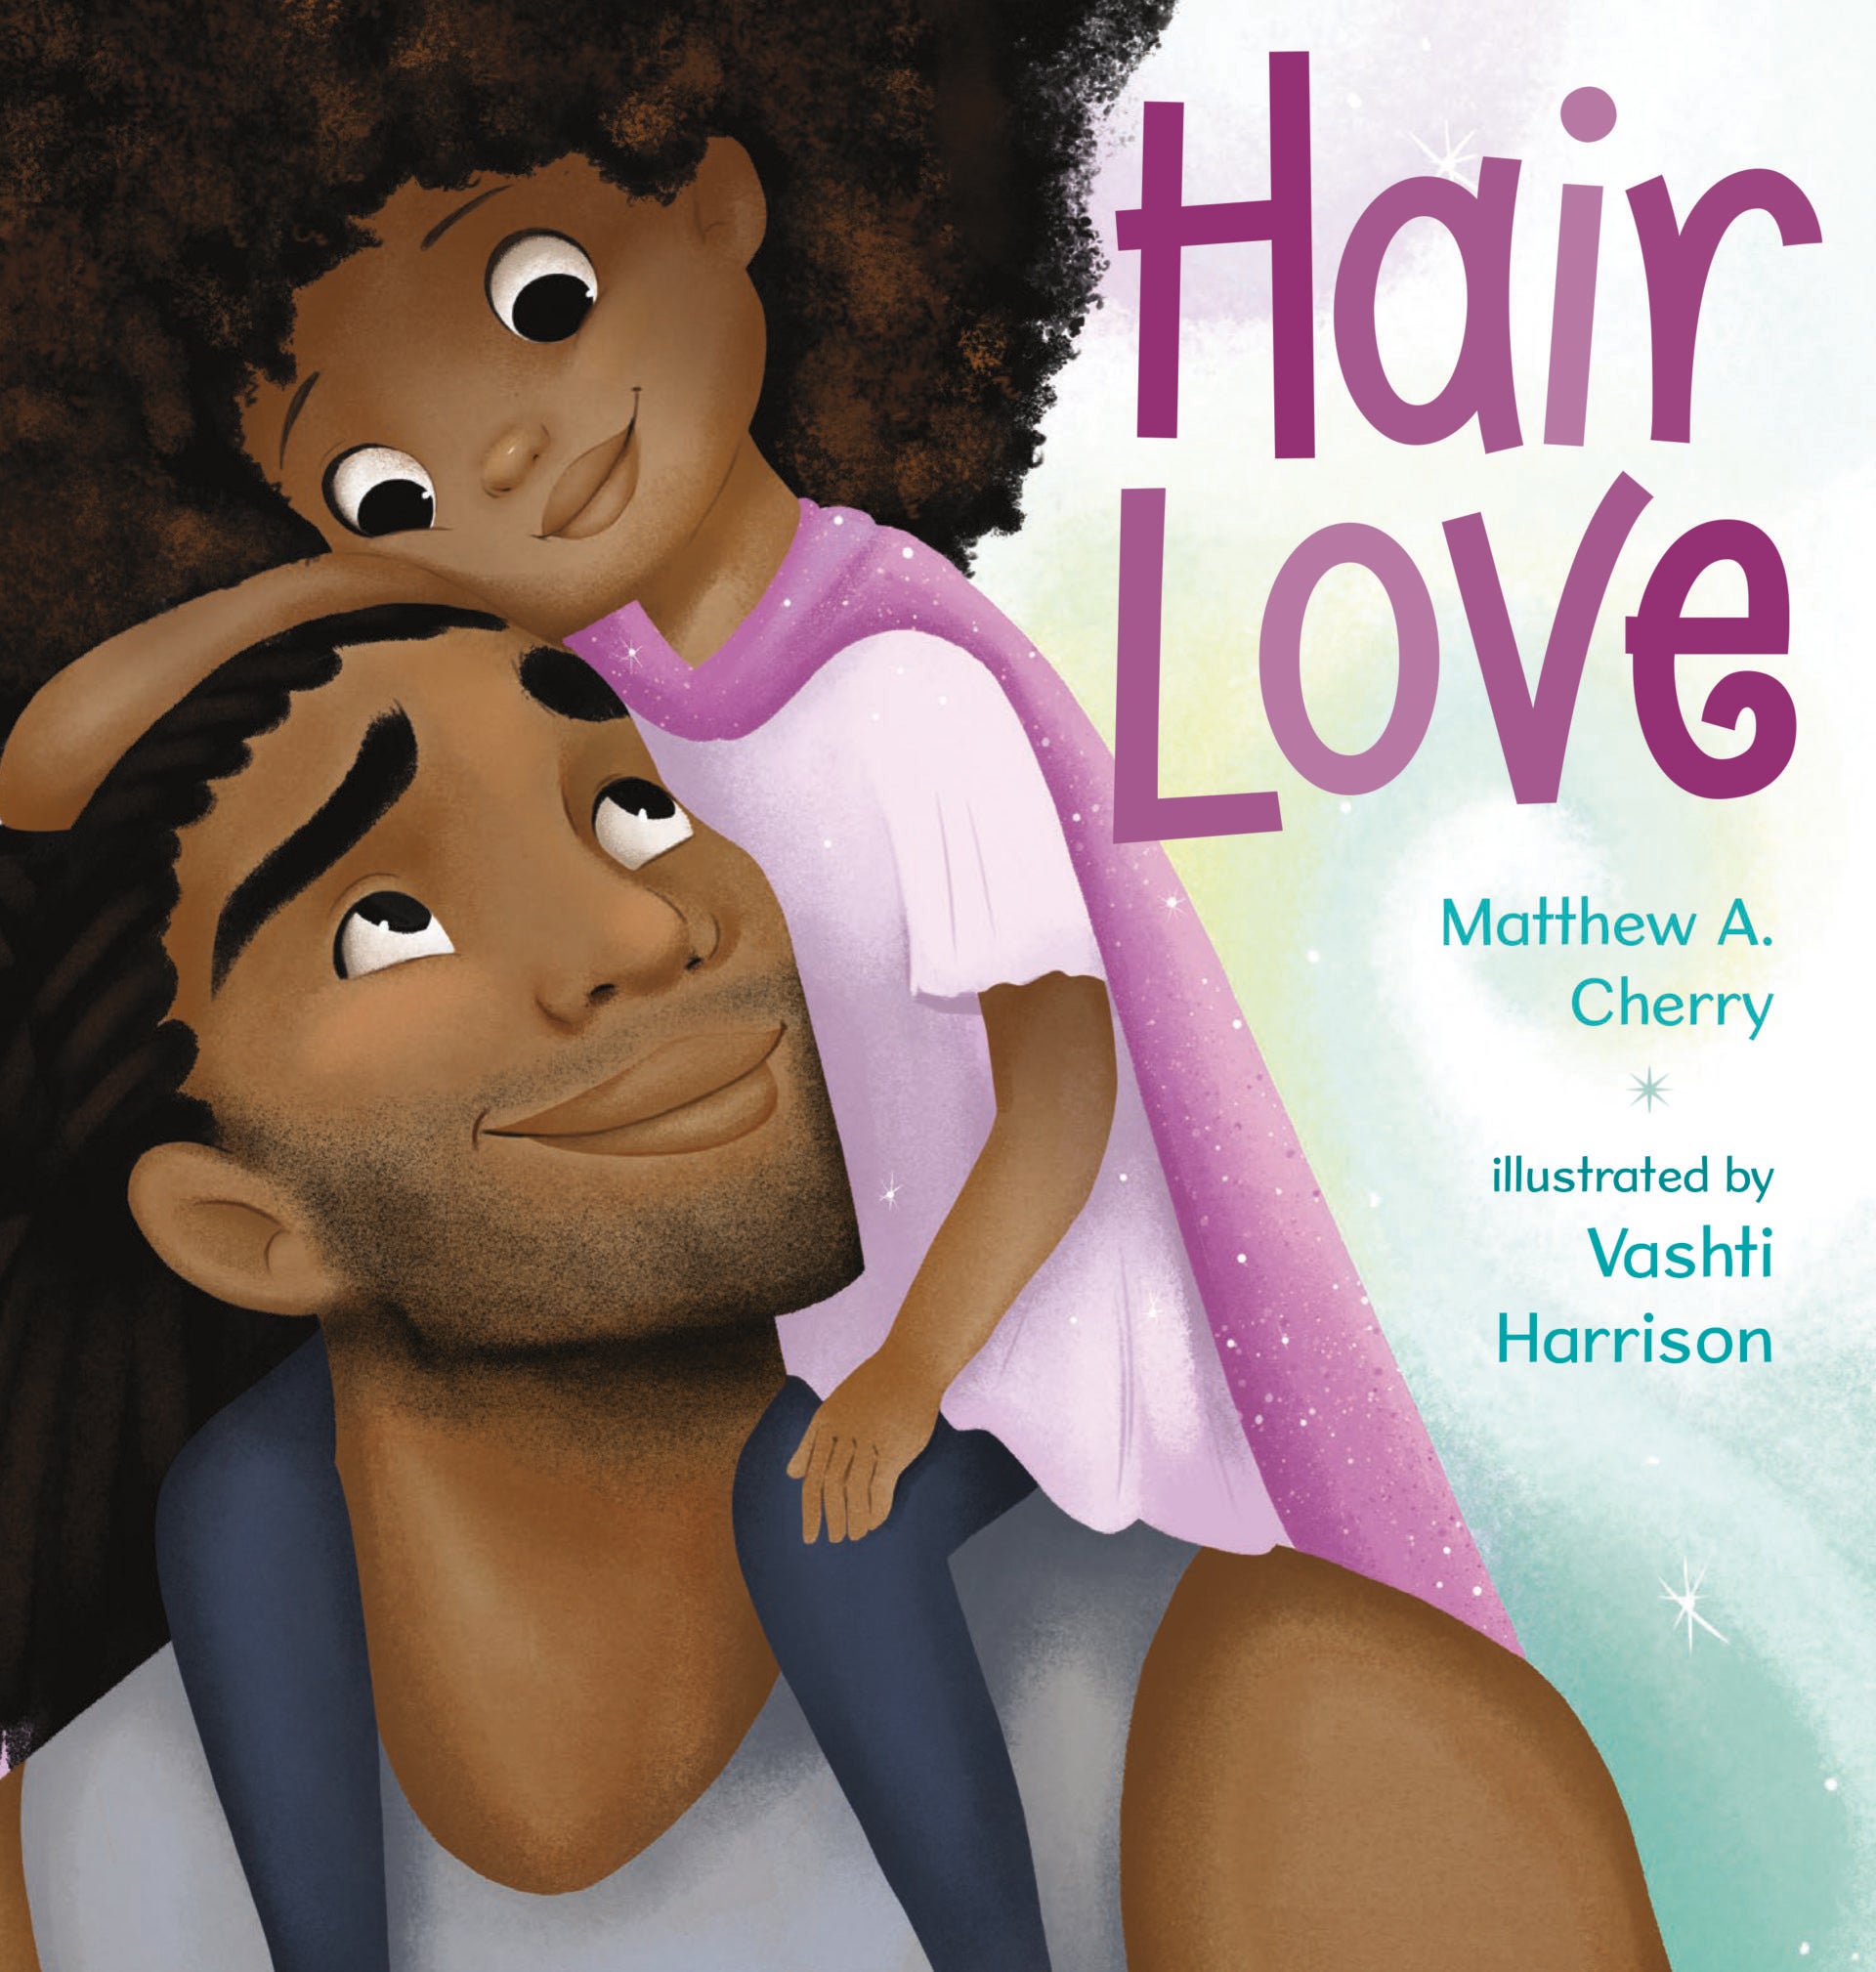 Matthew A. Cherry's 'Hair Love' To Hit The Big Screen